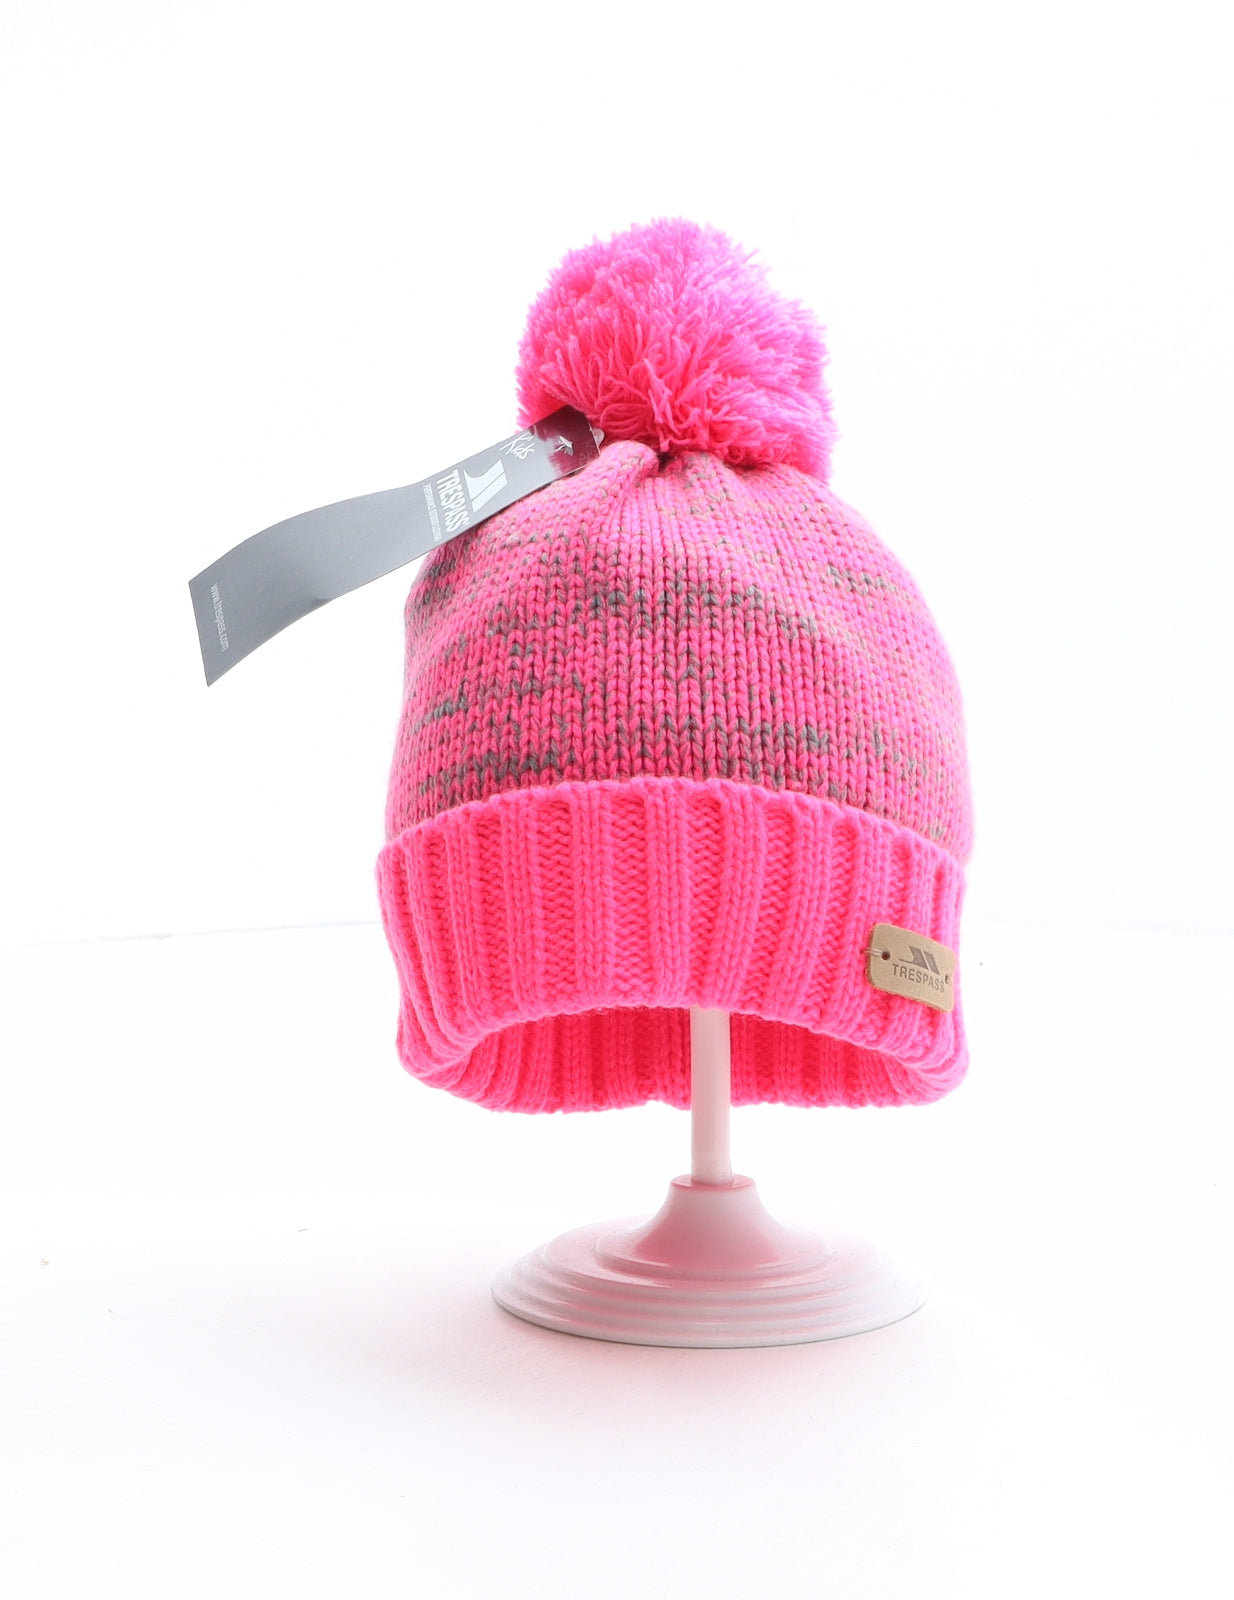 Trespass Girls Pink Acrylic Bobble Hat One Size